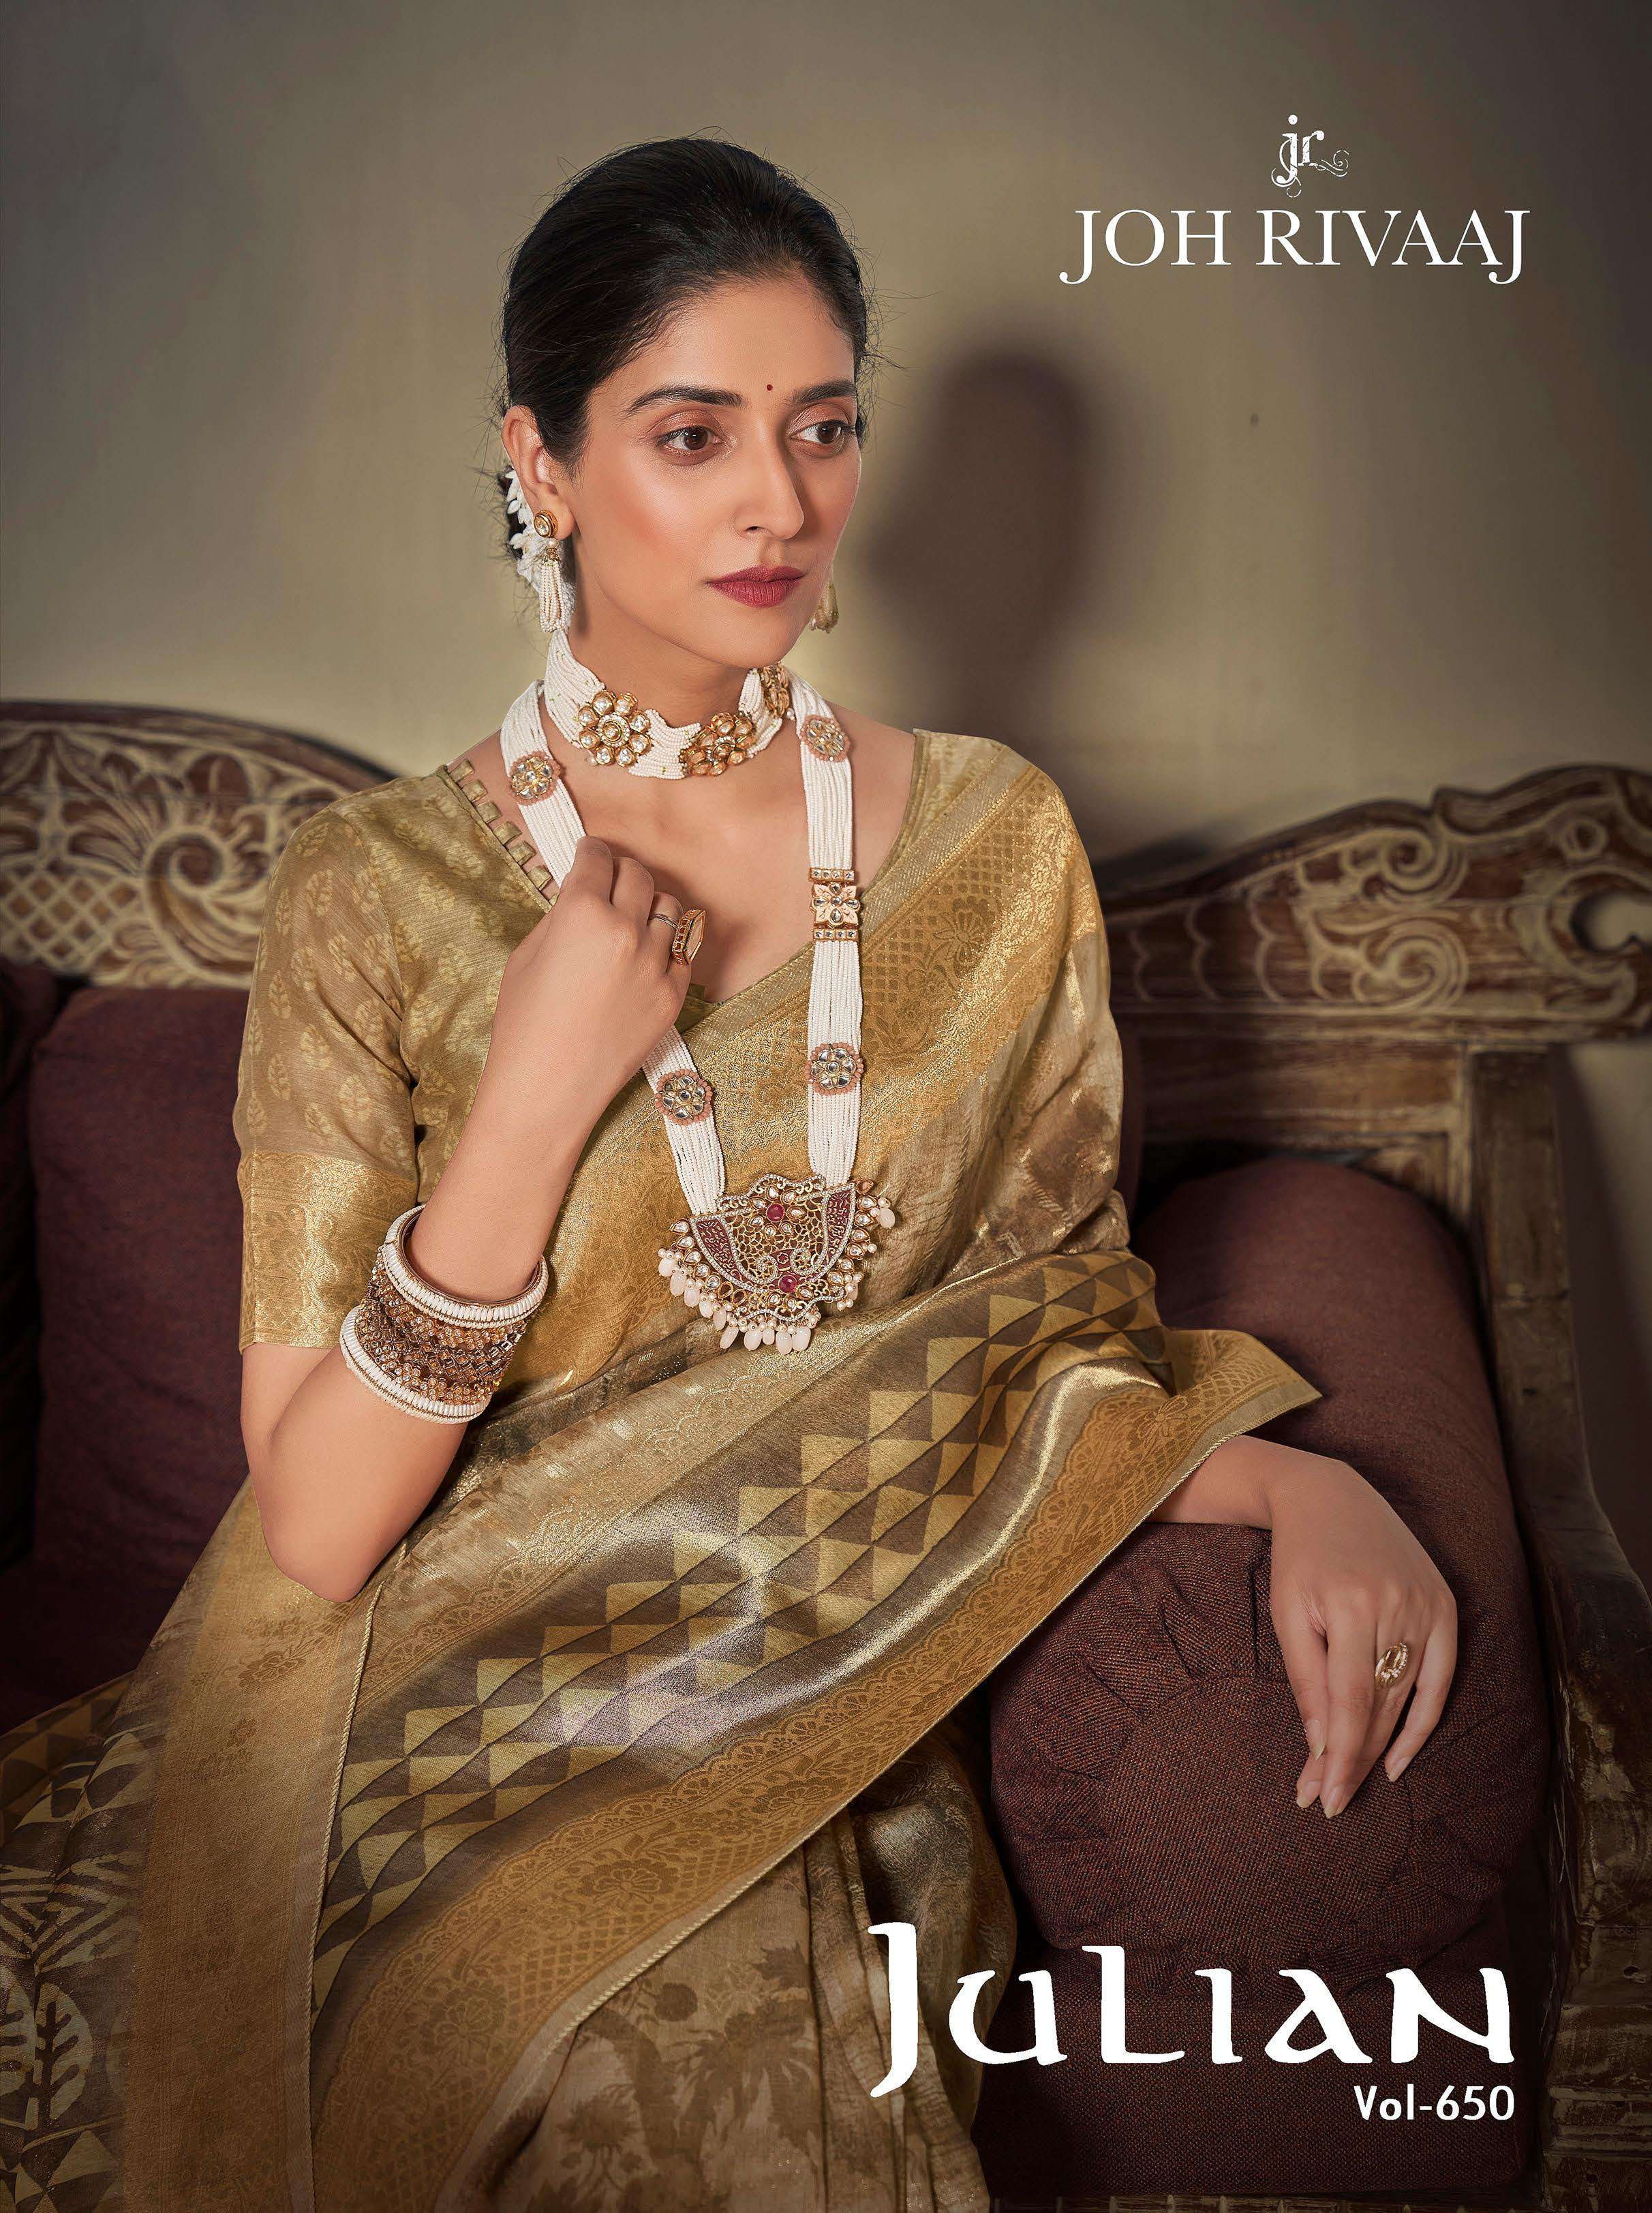 joh rivaaj present julian vol 650 amazing fancy saree collection